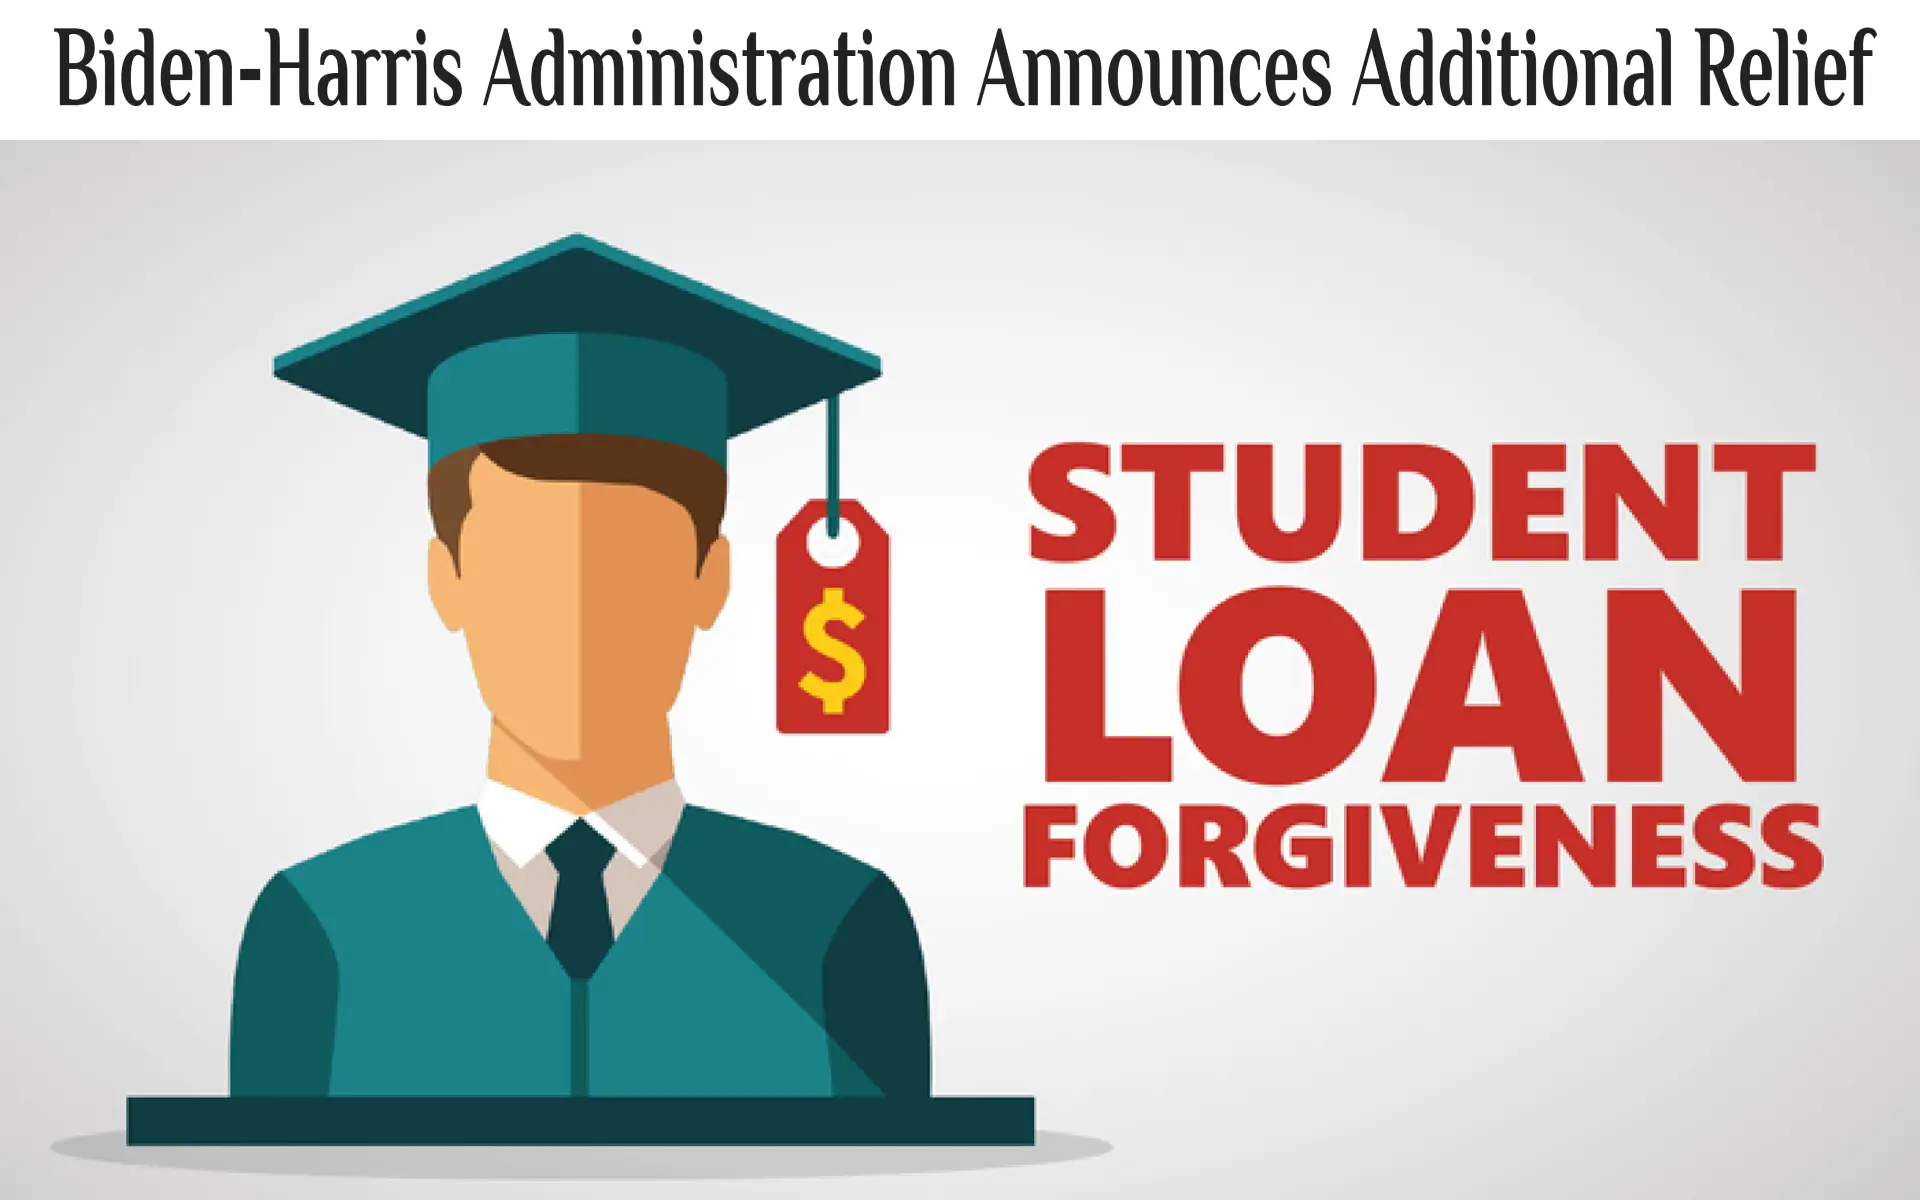 Student Loan Forgiveness: Biden-Harris Administration Announces Additional Relief